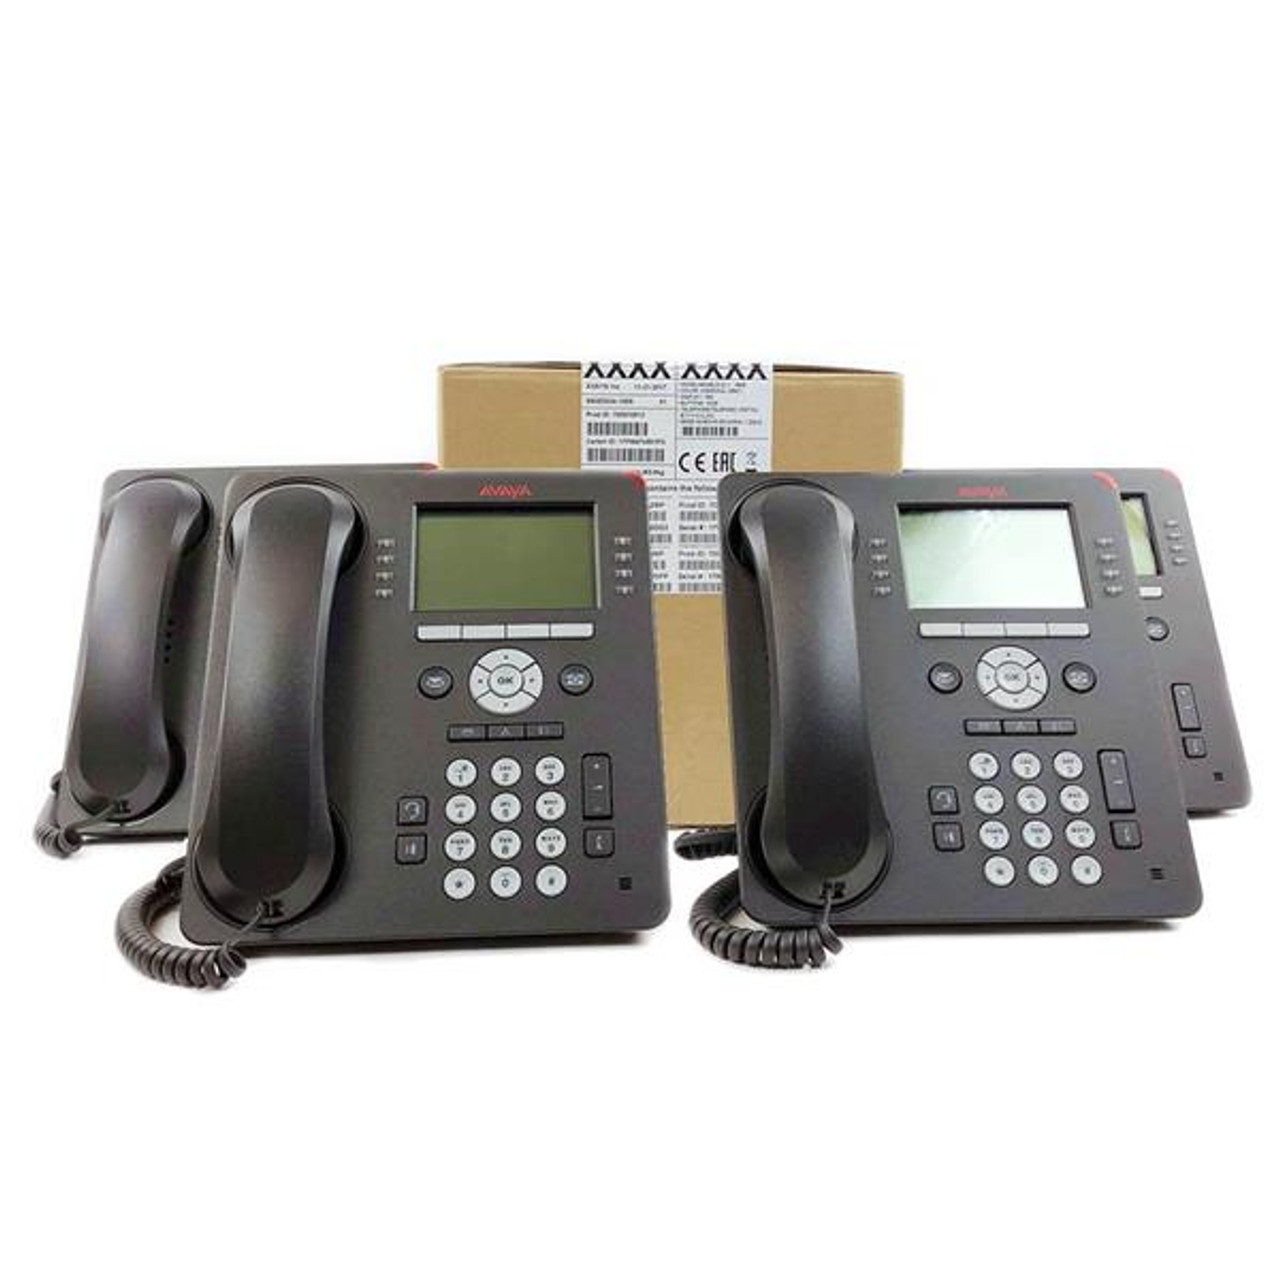 700500207 Avaya-IMSourcing 9508 Standard Phone Charcoal Gray 1 x Phone Line Speakerphone Backlight (Refurbished)